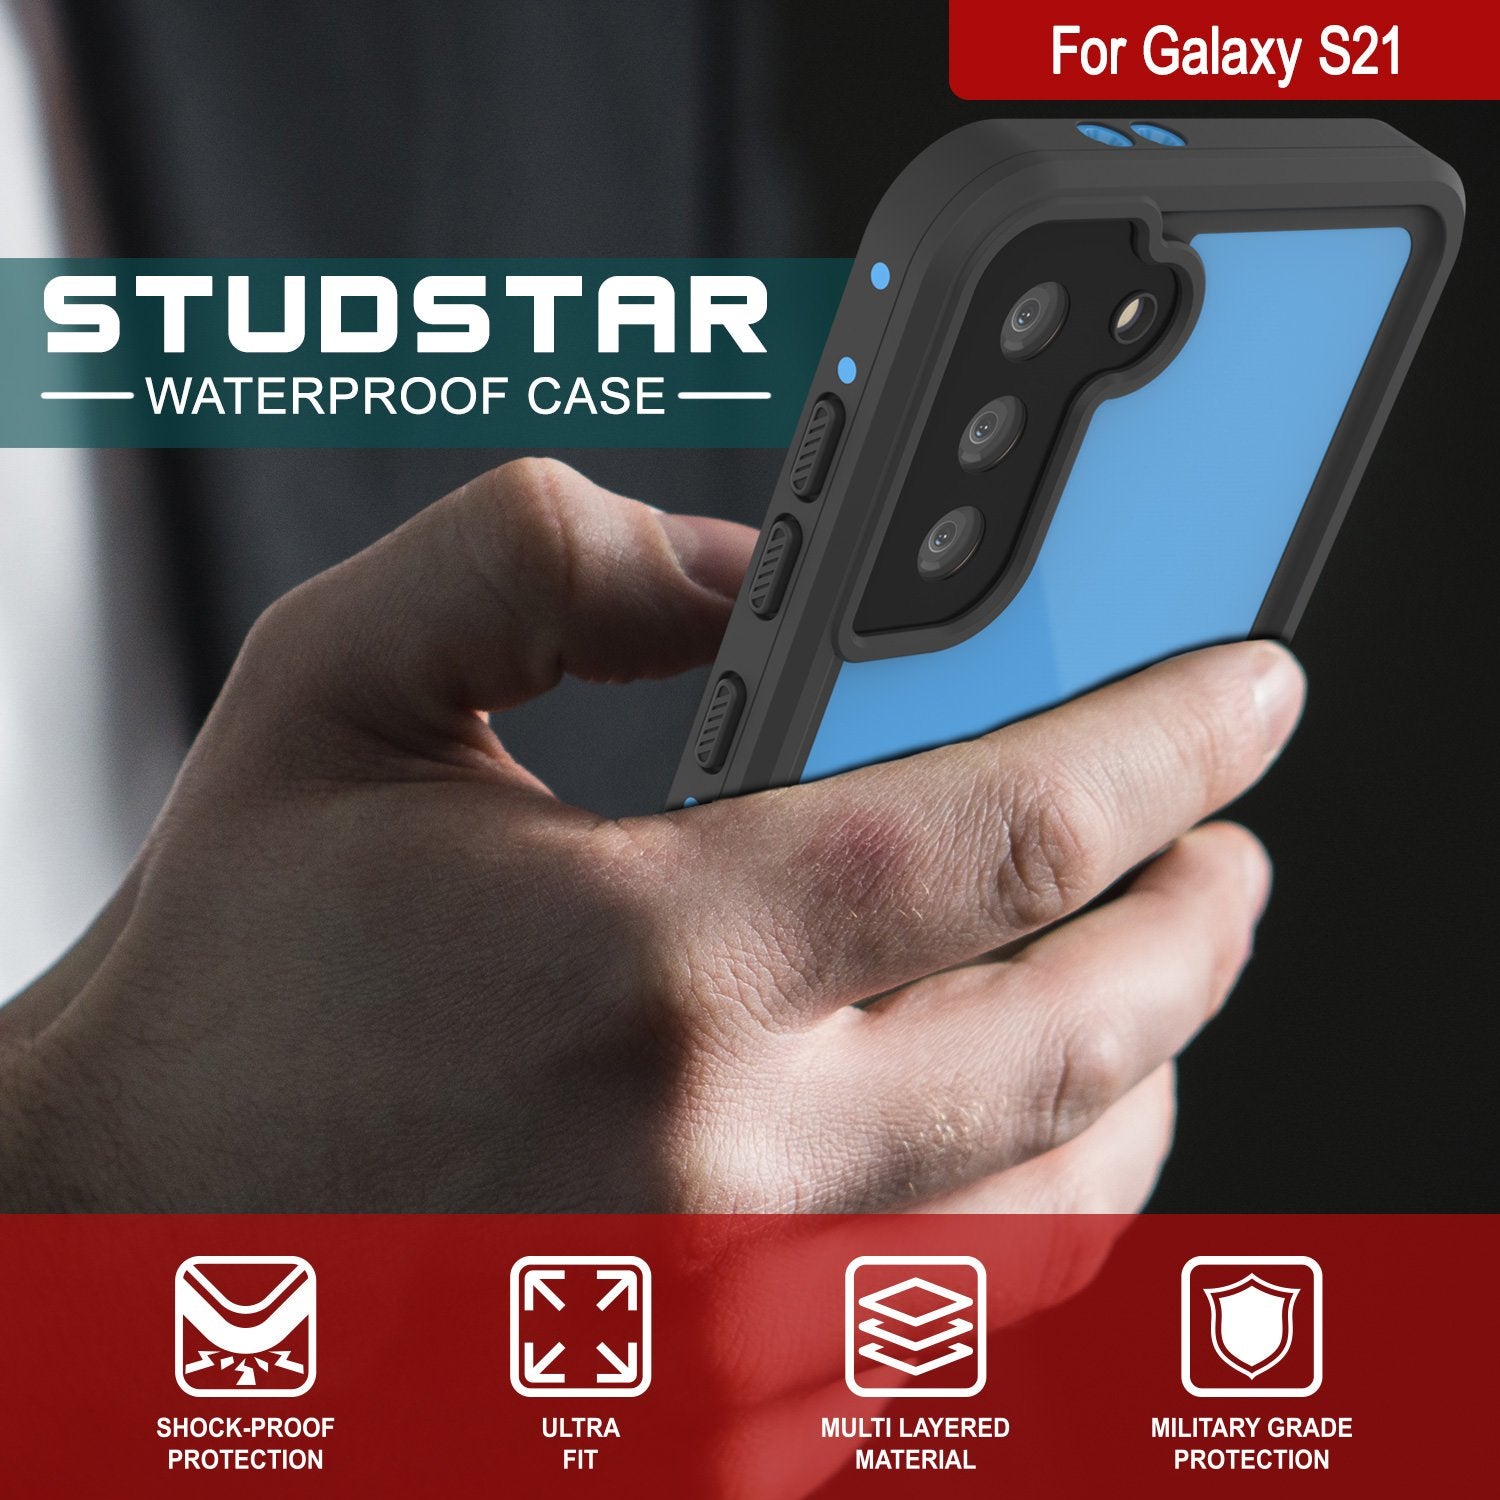 Galaxy S21 Waterproof Case PunkCase StudStar Light Blue Thin 6.6ft Underwater IP68 ShockProof